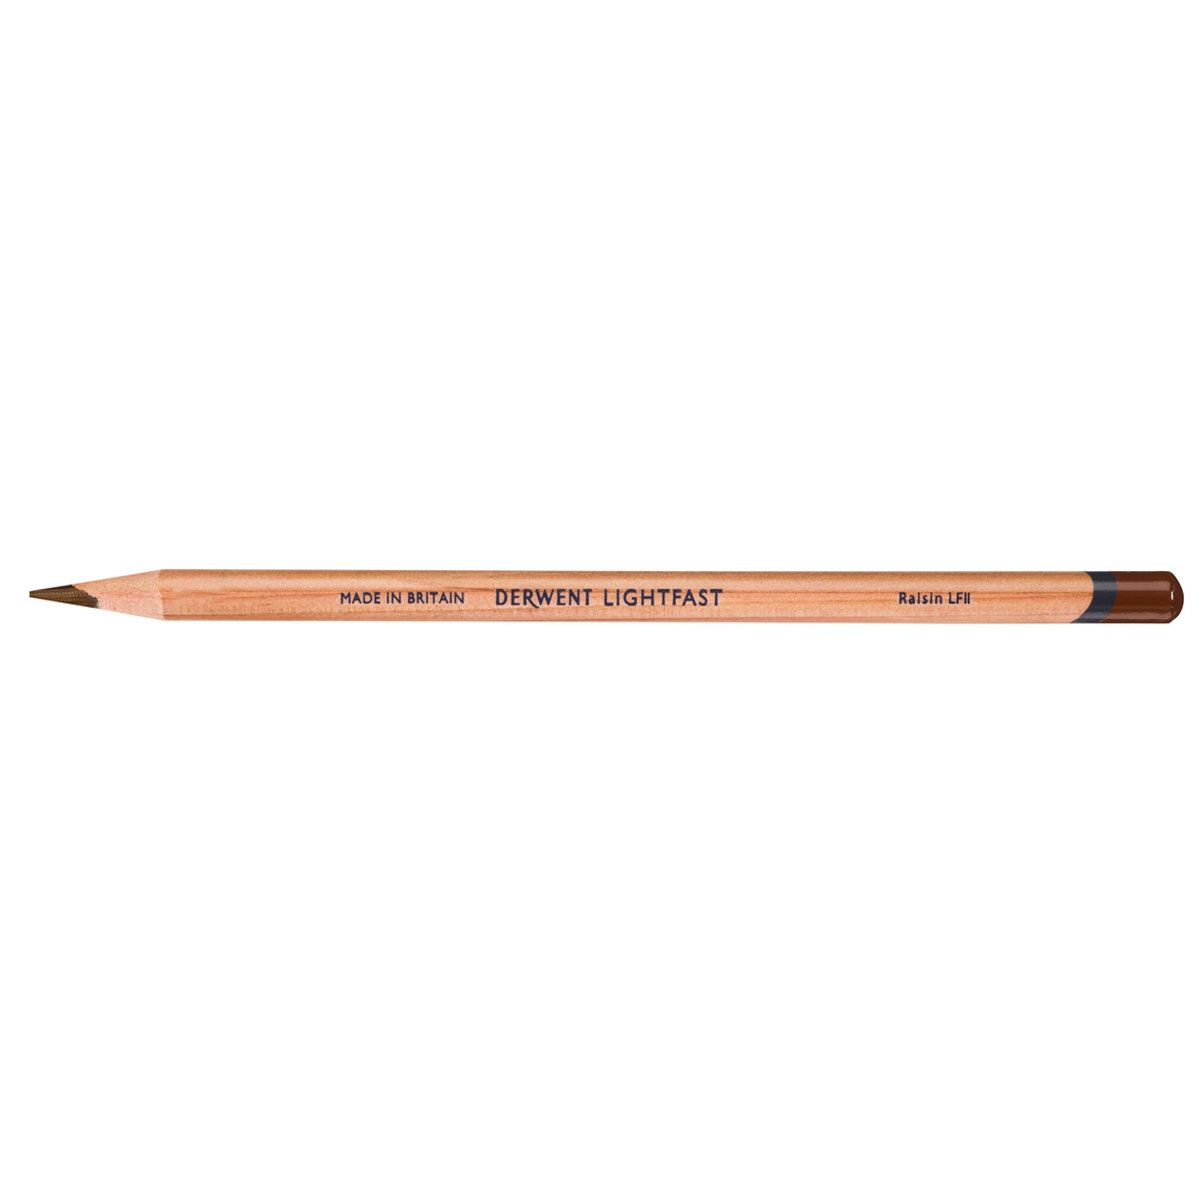 NEW Derwent Lightfast Pencil Colour: Raisin